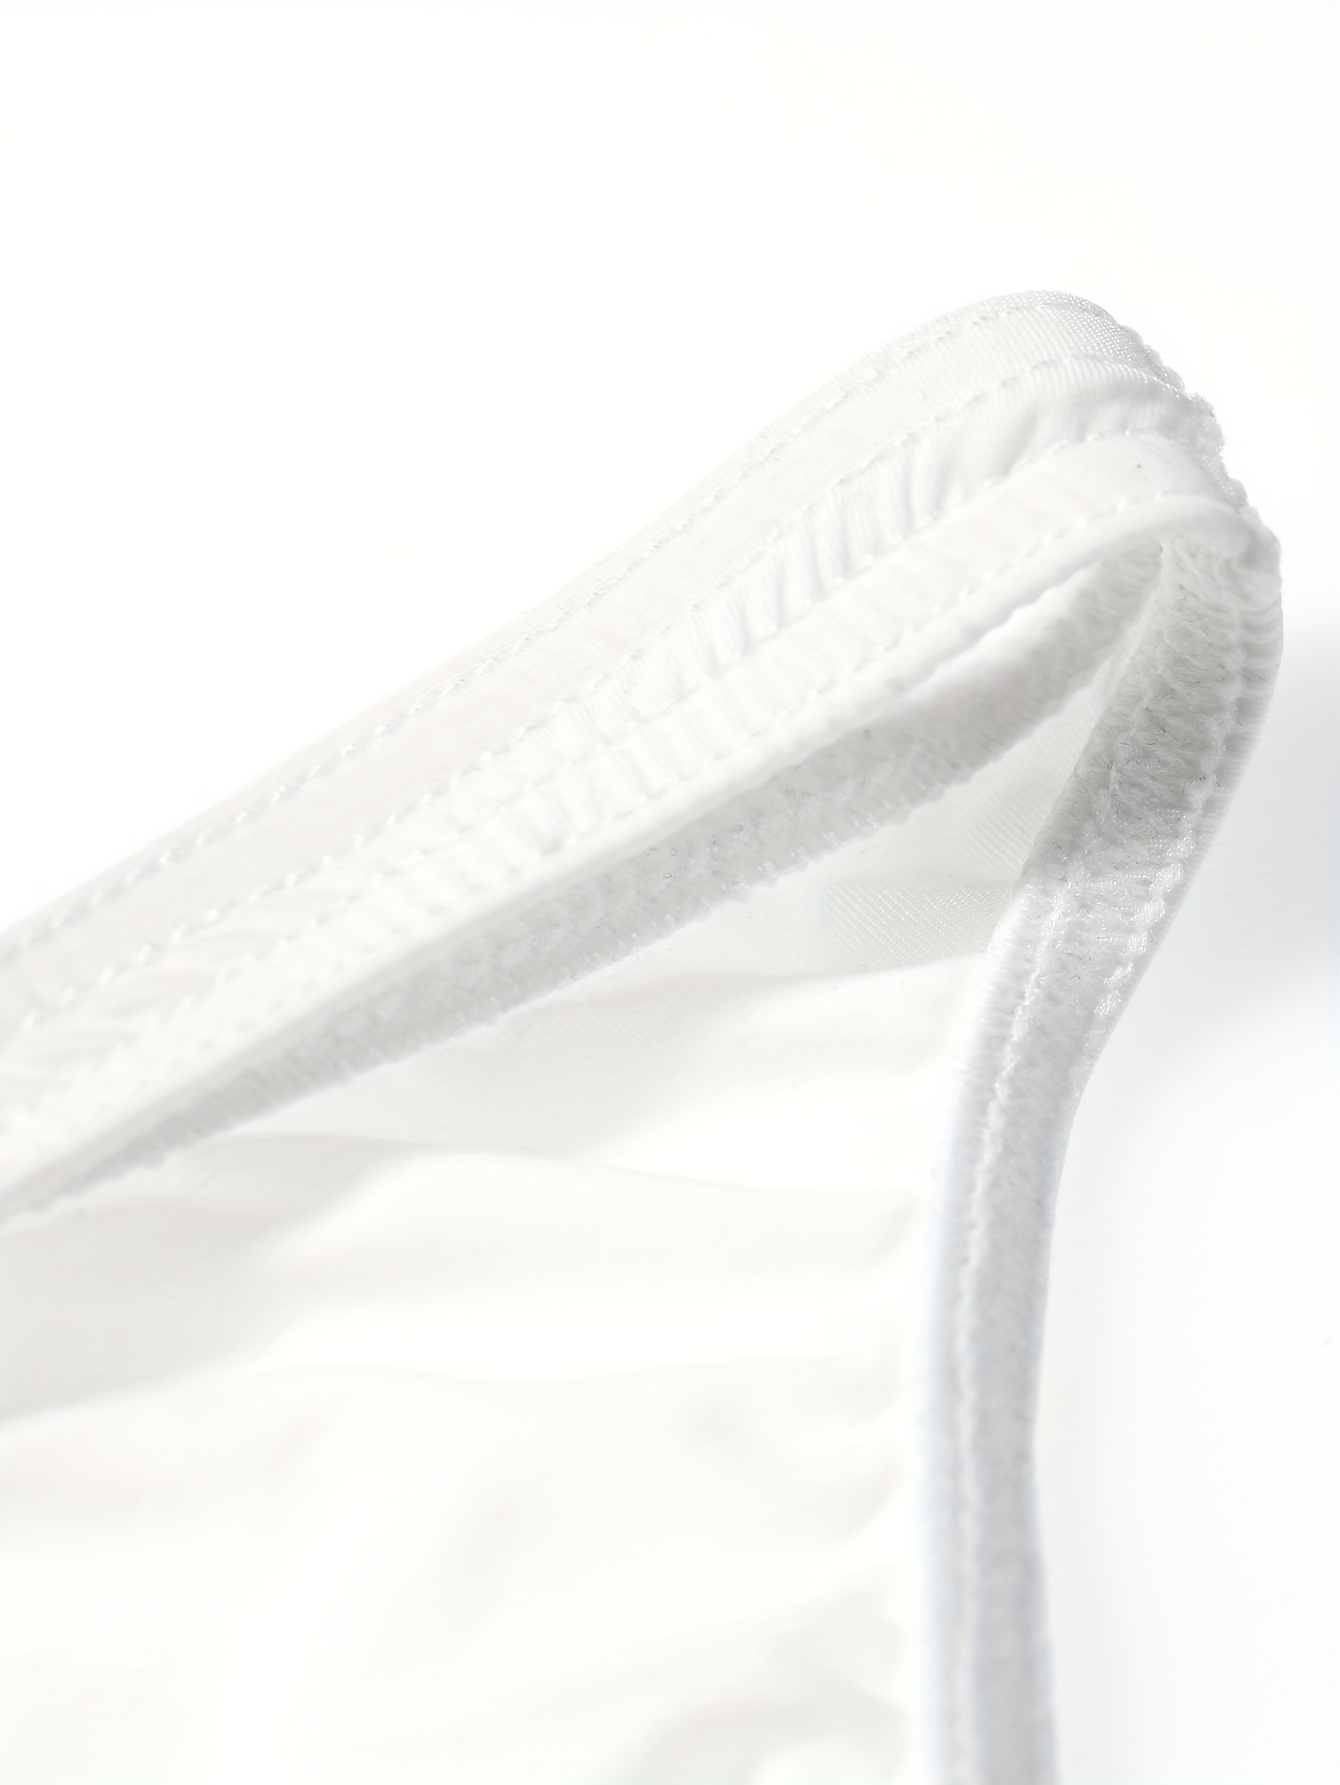 Mens Premium Thermal Union Suit,Ultra Thin ice Silk Underwear Suit,  Seamless Men's Underwear (Beige,M) at  Men's Clothing store